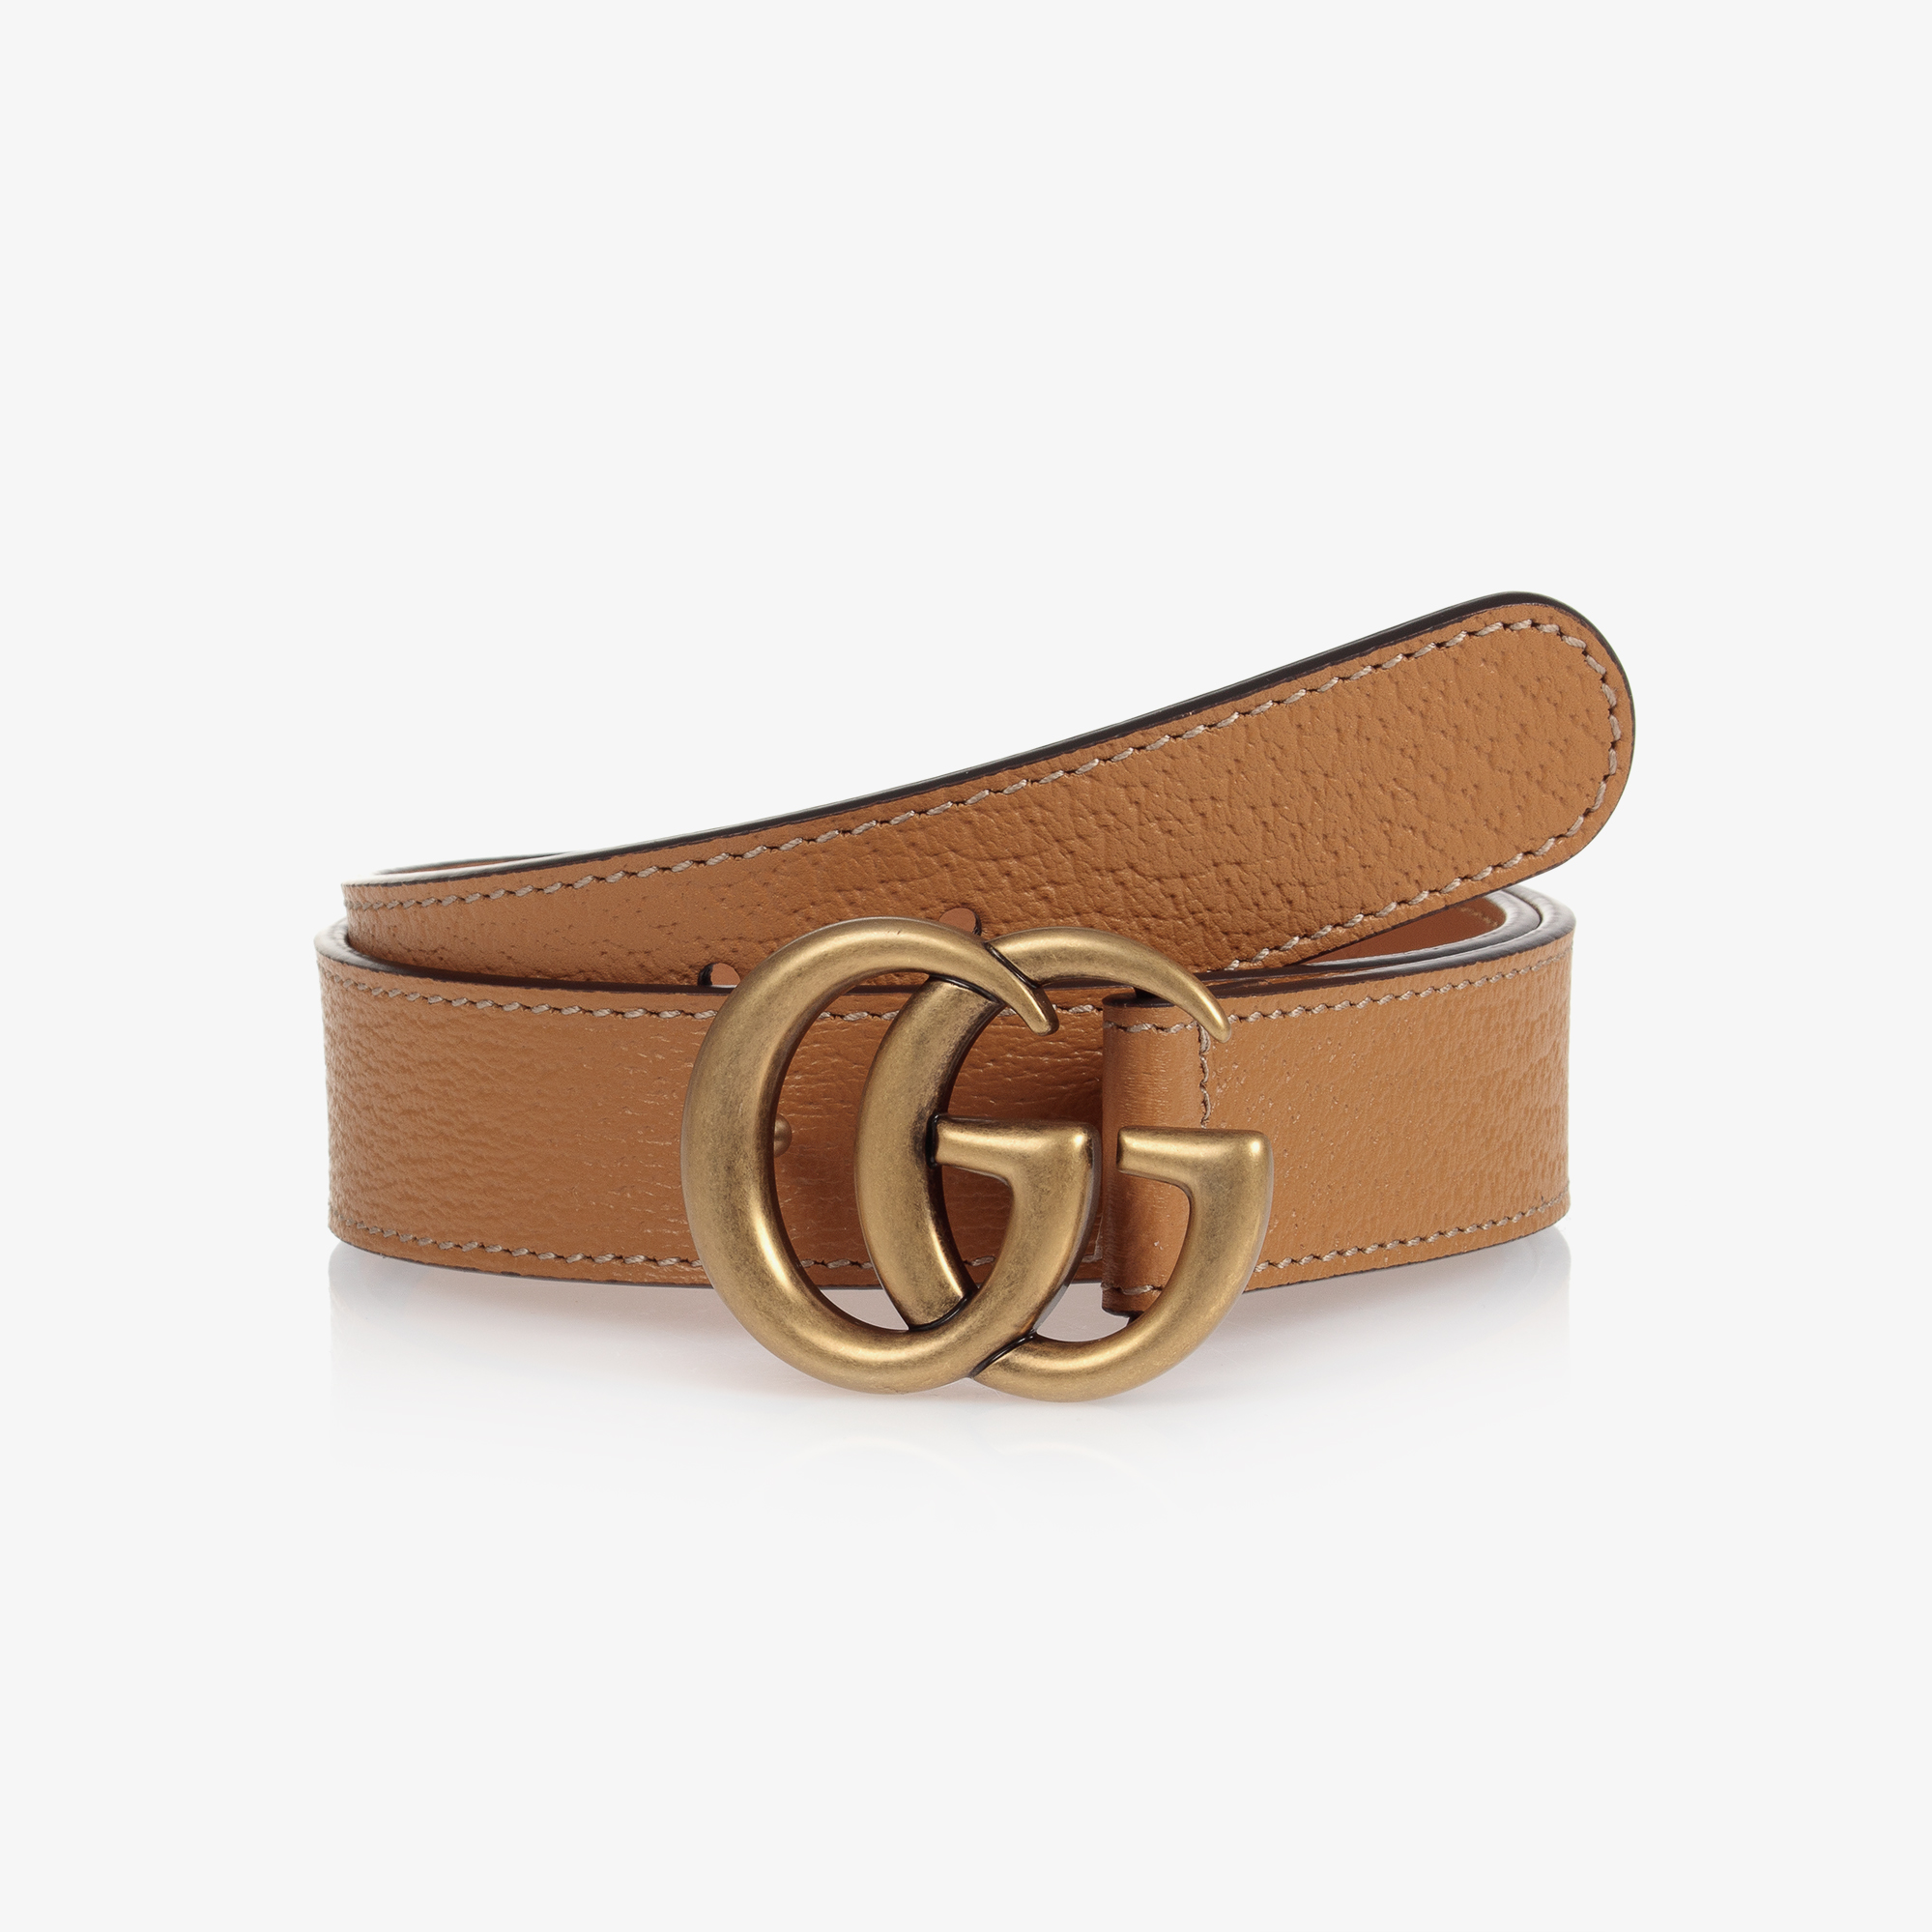 Gucci Girls GG Leather Belt